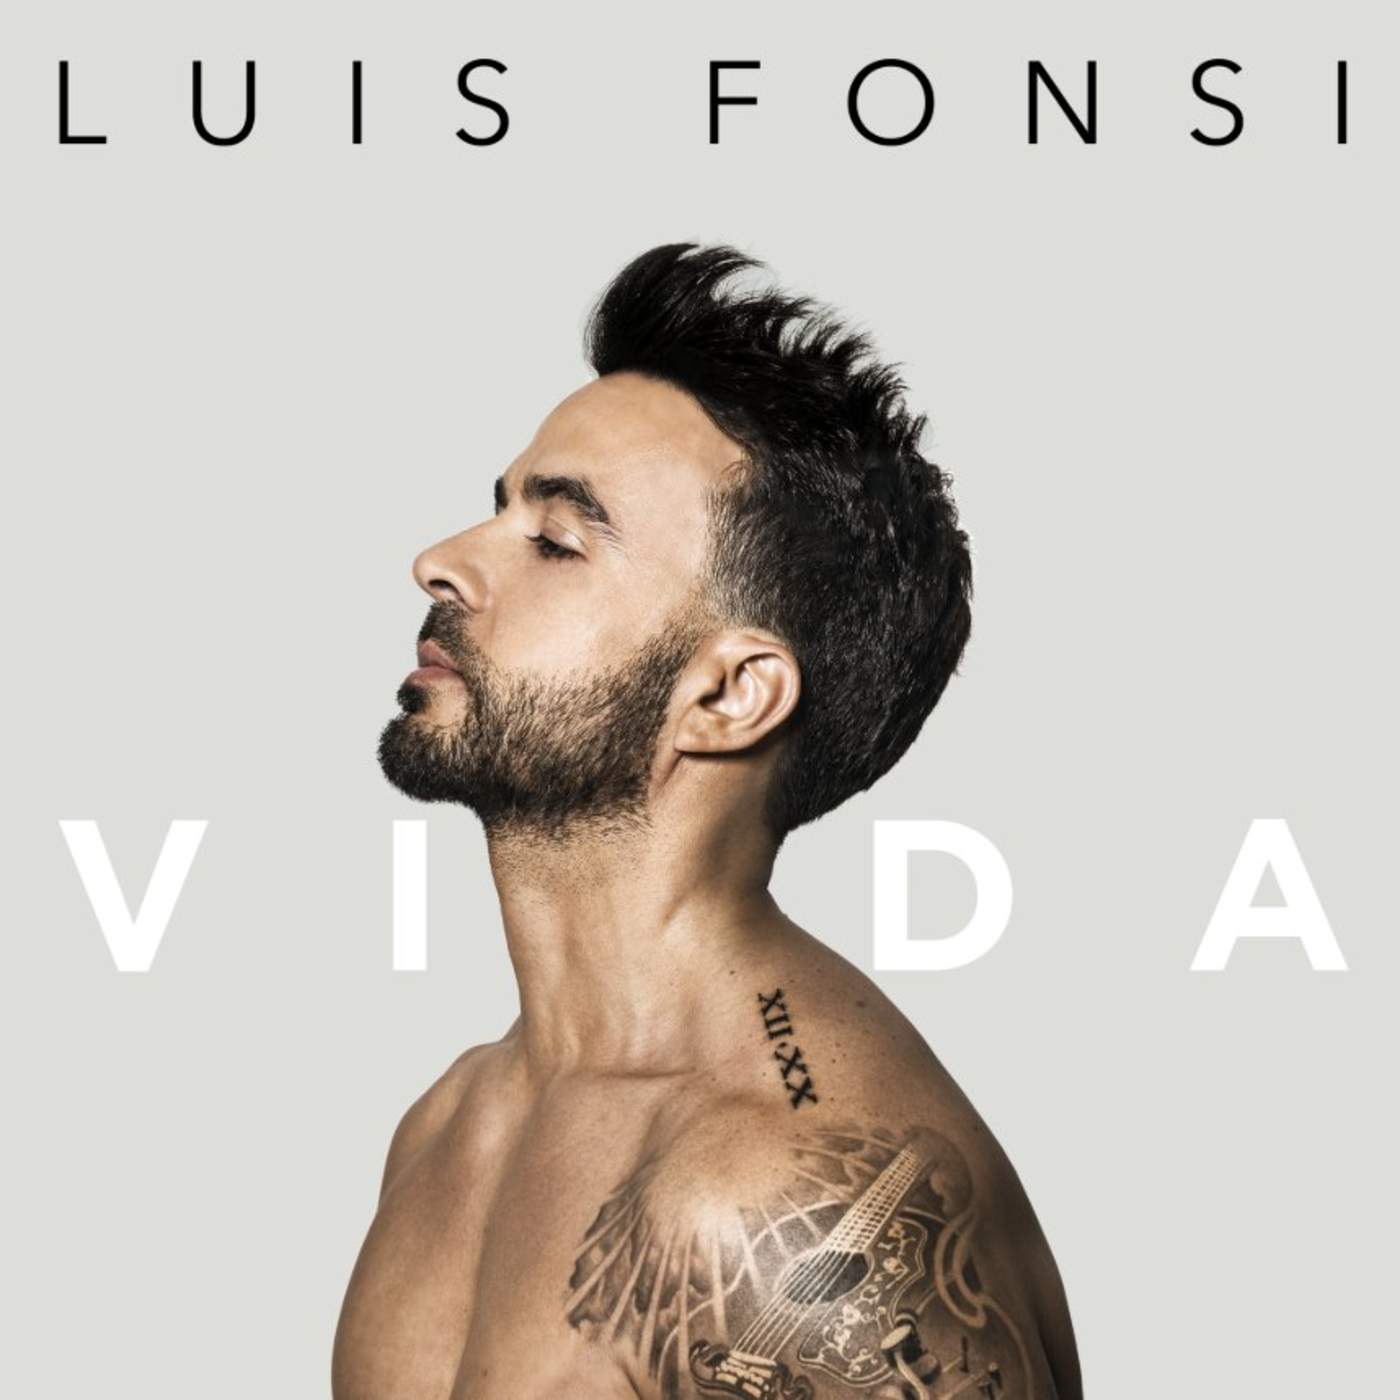 Luis Fonsi estrena su disco Vida